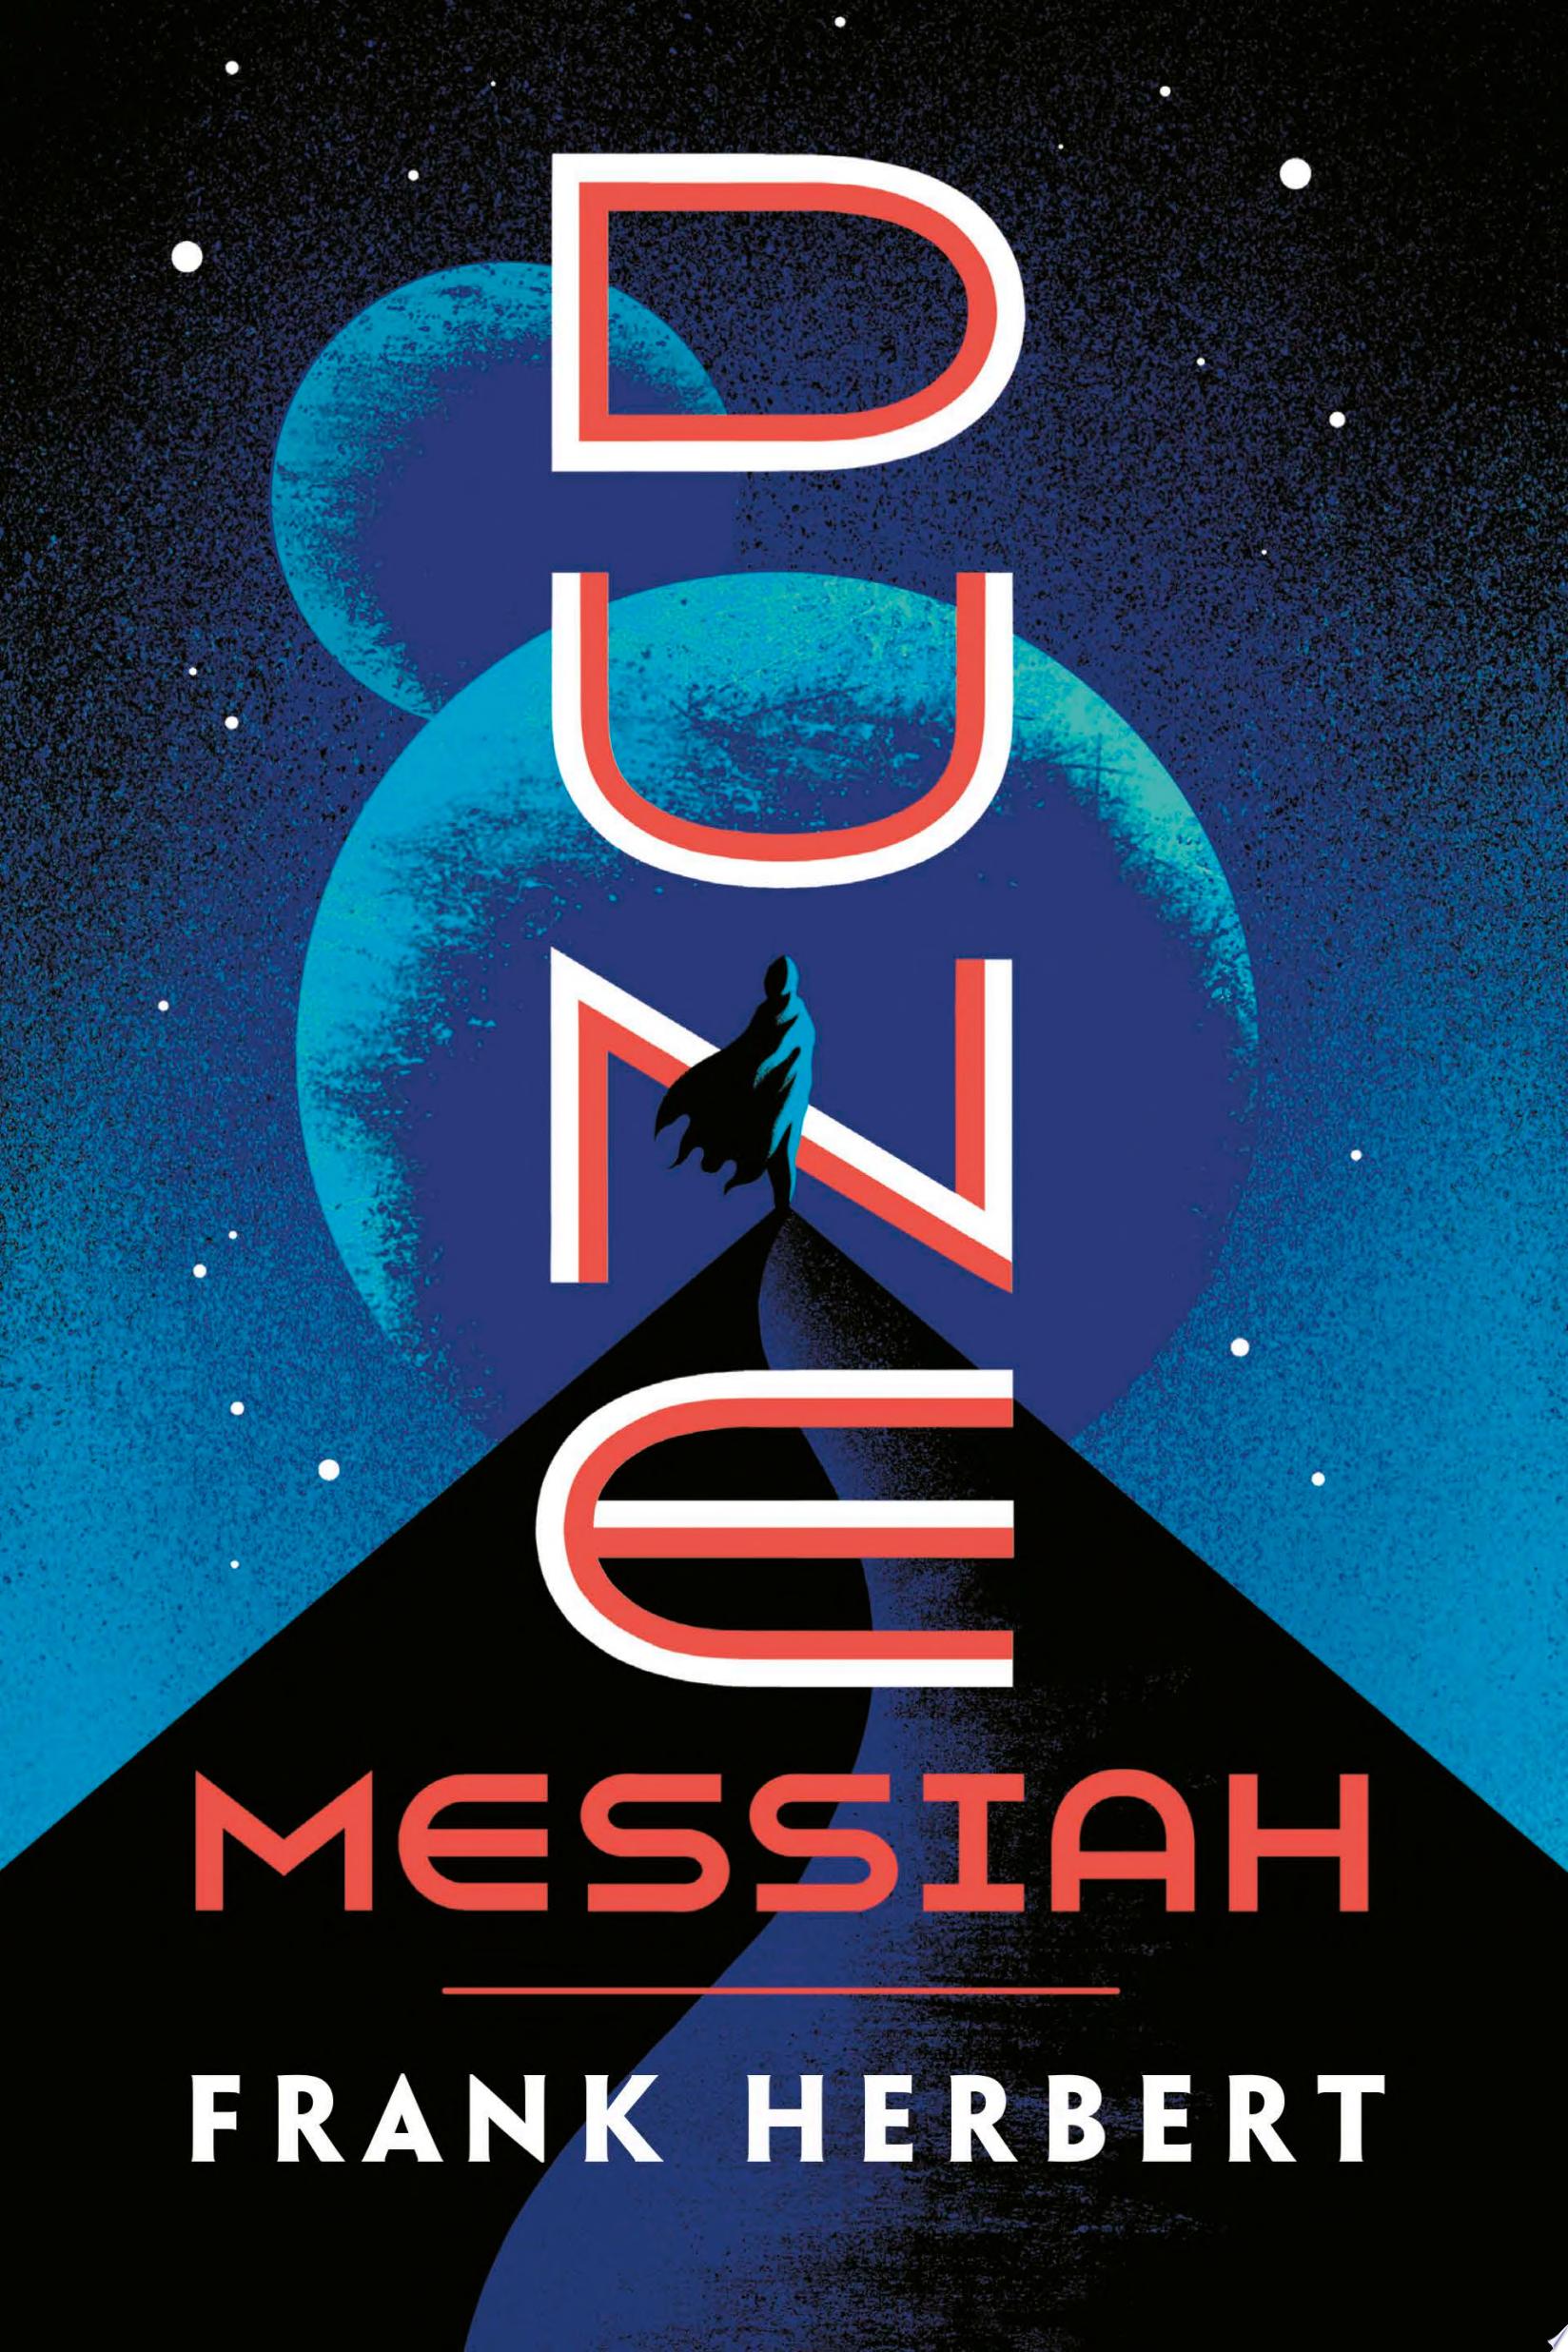 Image for "Dune Messiah"